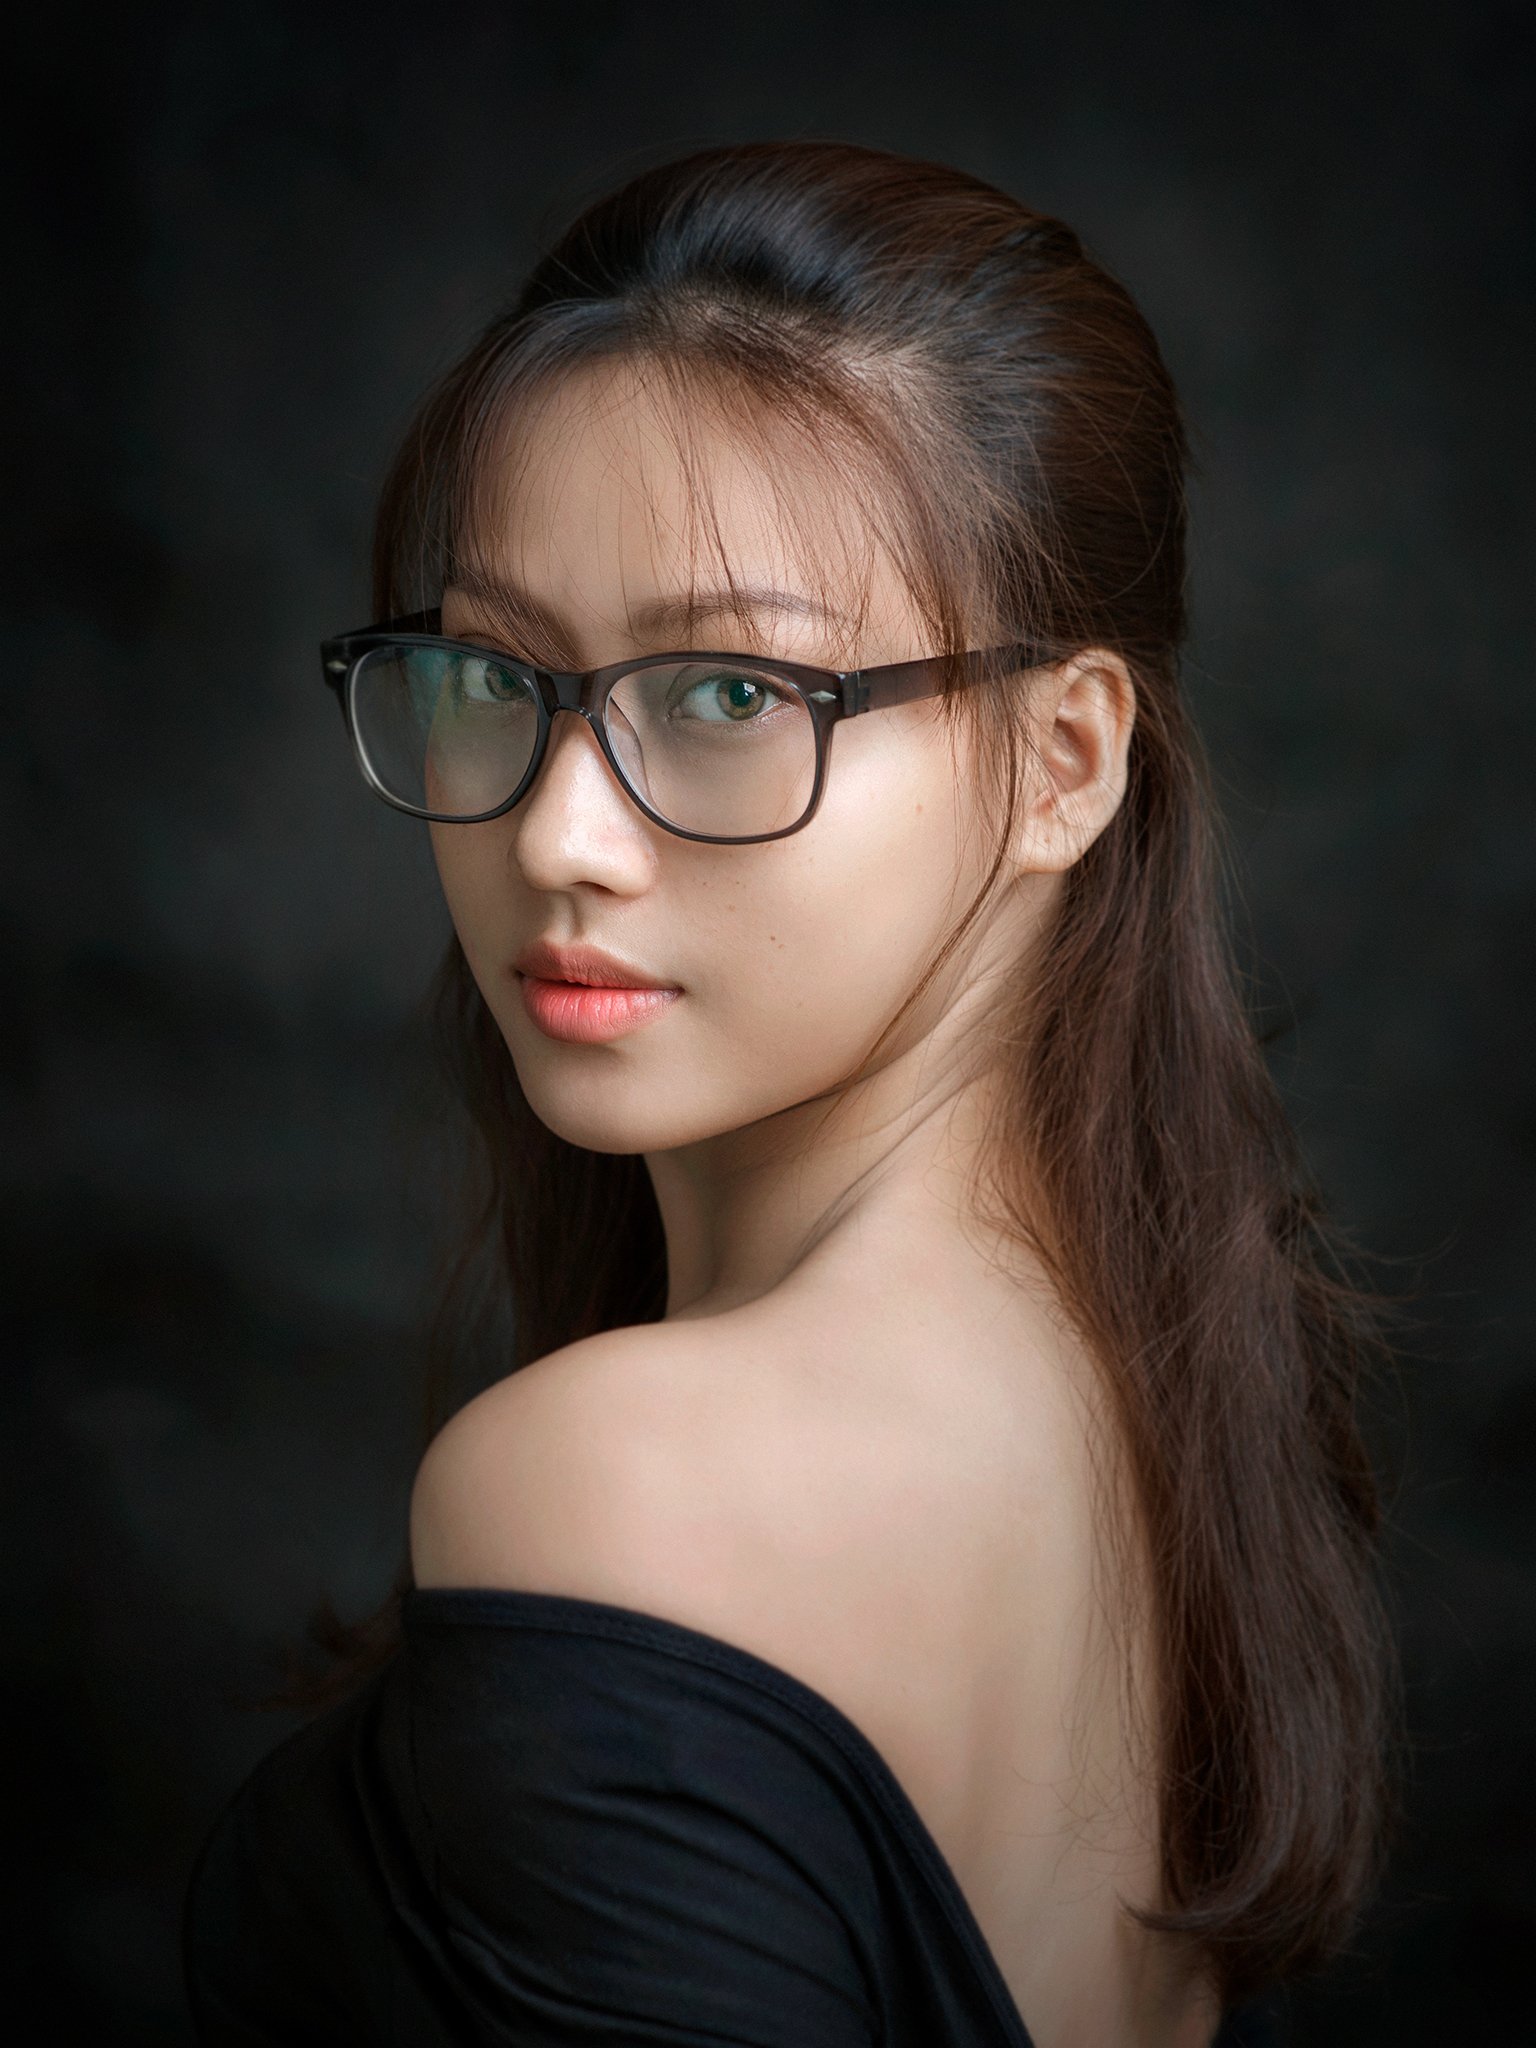 portrait, people, face, hair, studio, dark, light, asian, vietnam, vietnamese, young, attractive, lips, female, girl, eyes, glasses, nerd, nerdy, Hoang Viet Nguyen